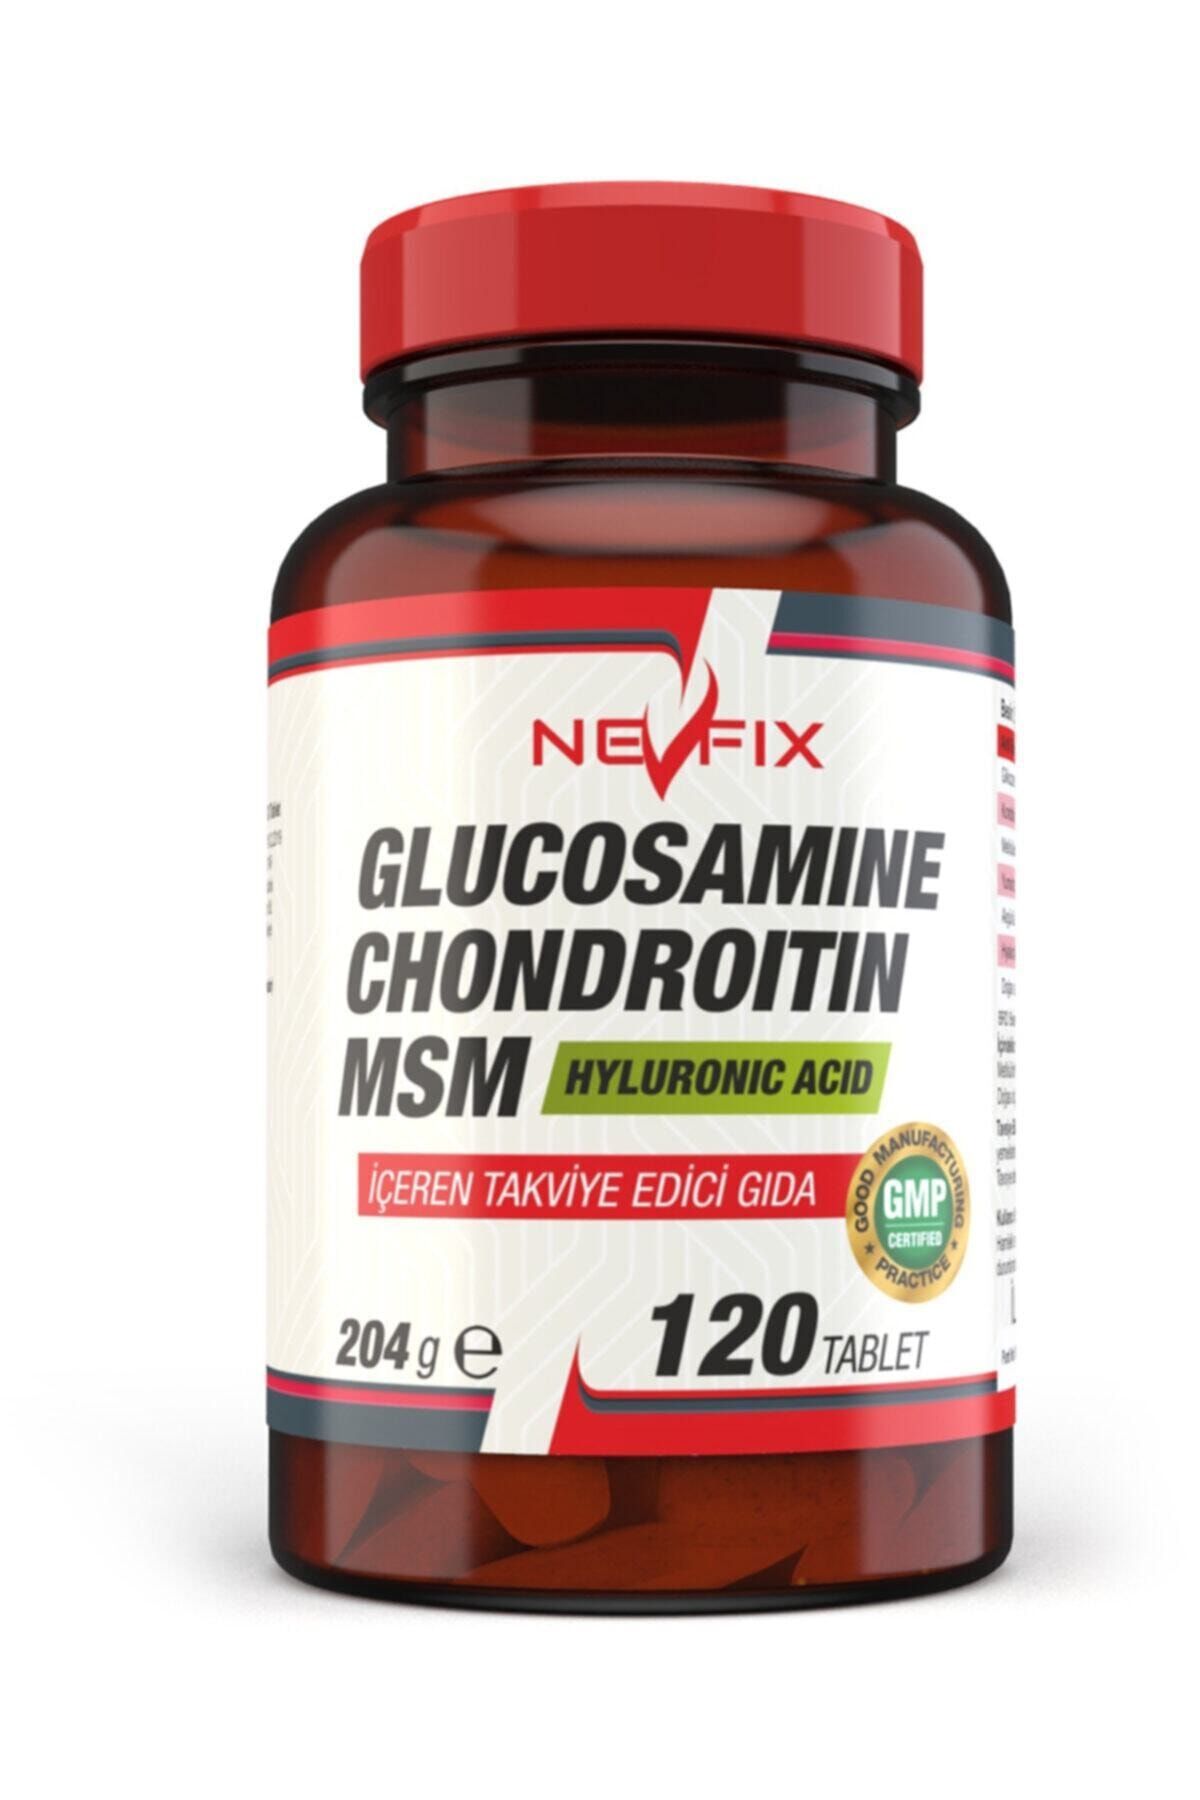 Nevfix Glucosamine Chondroitin Msm Hyaluronic Acid 120 Tablet